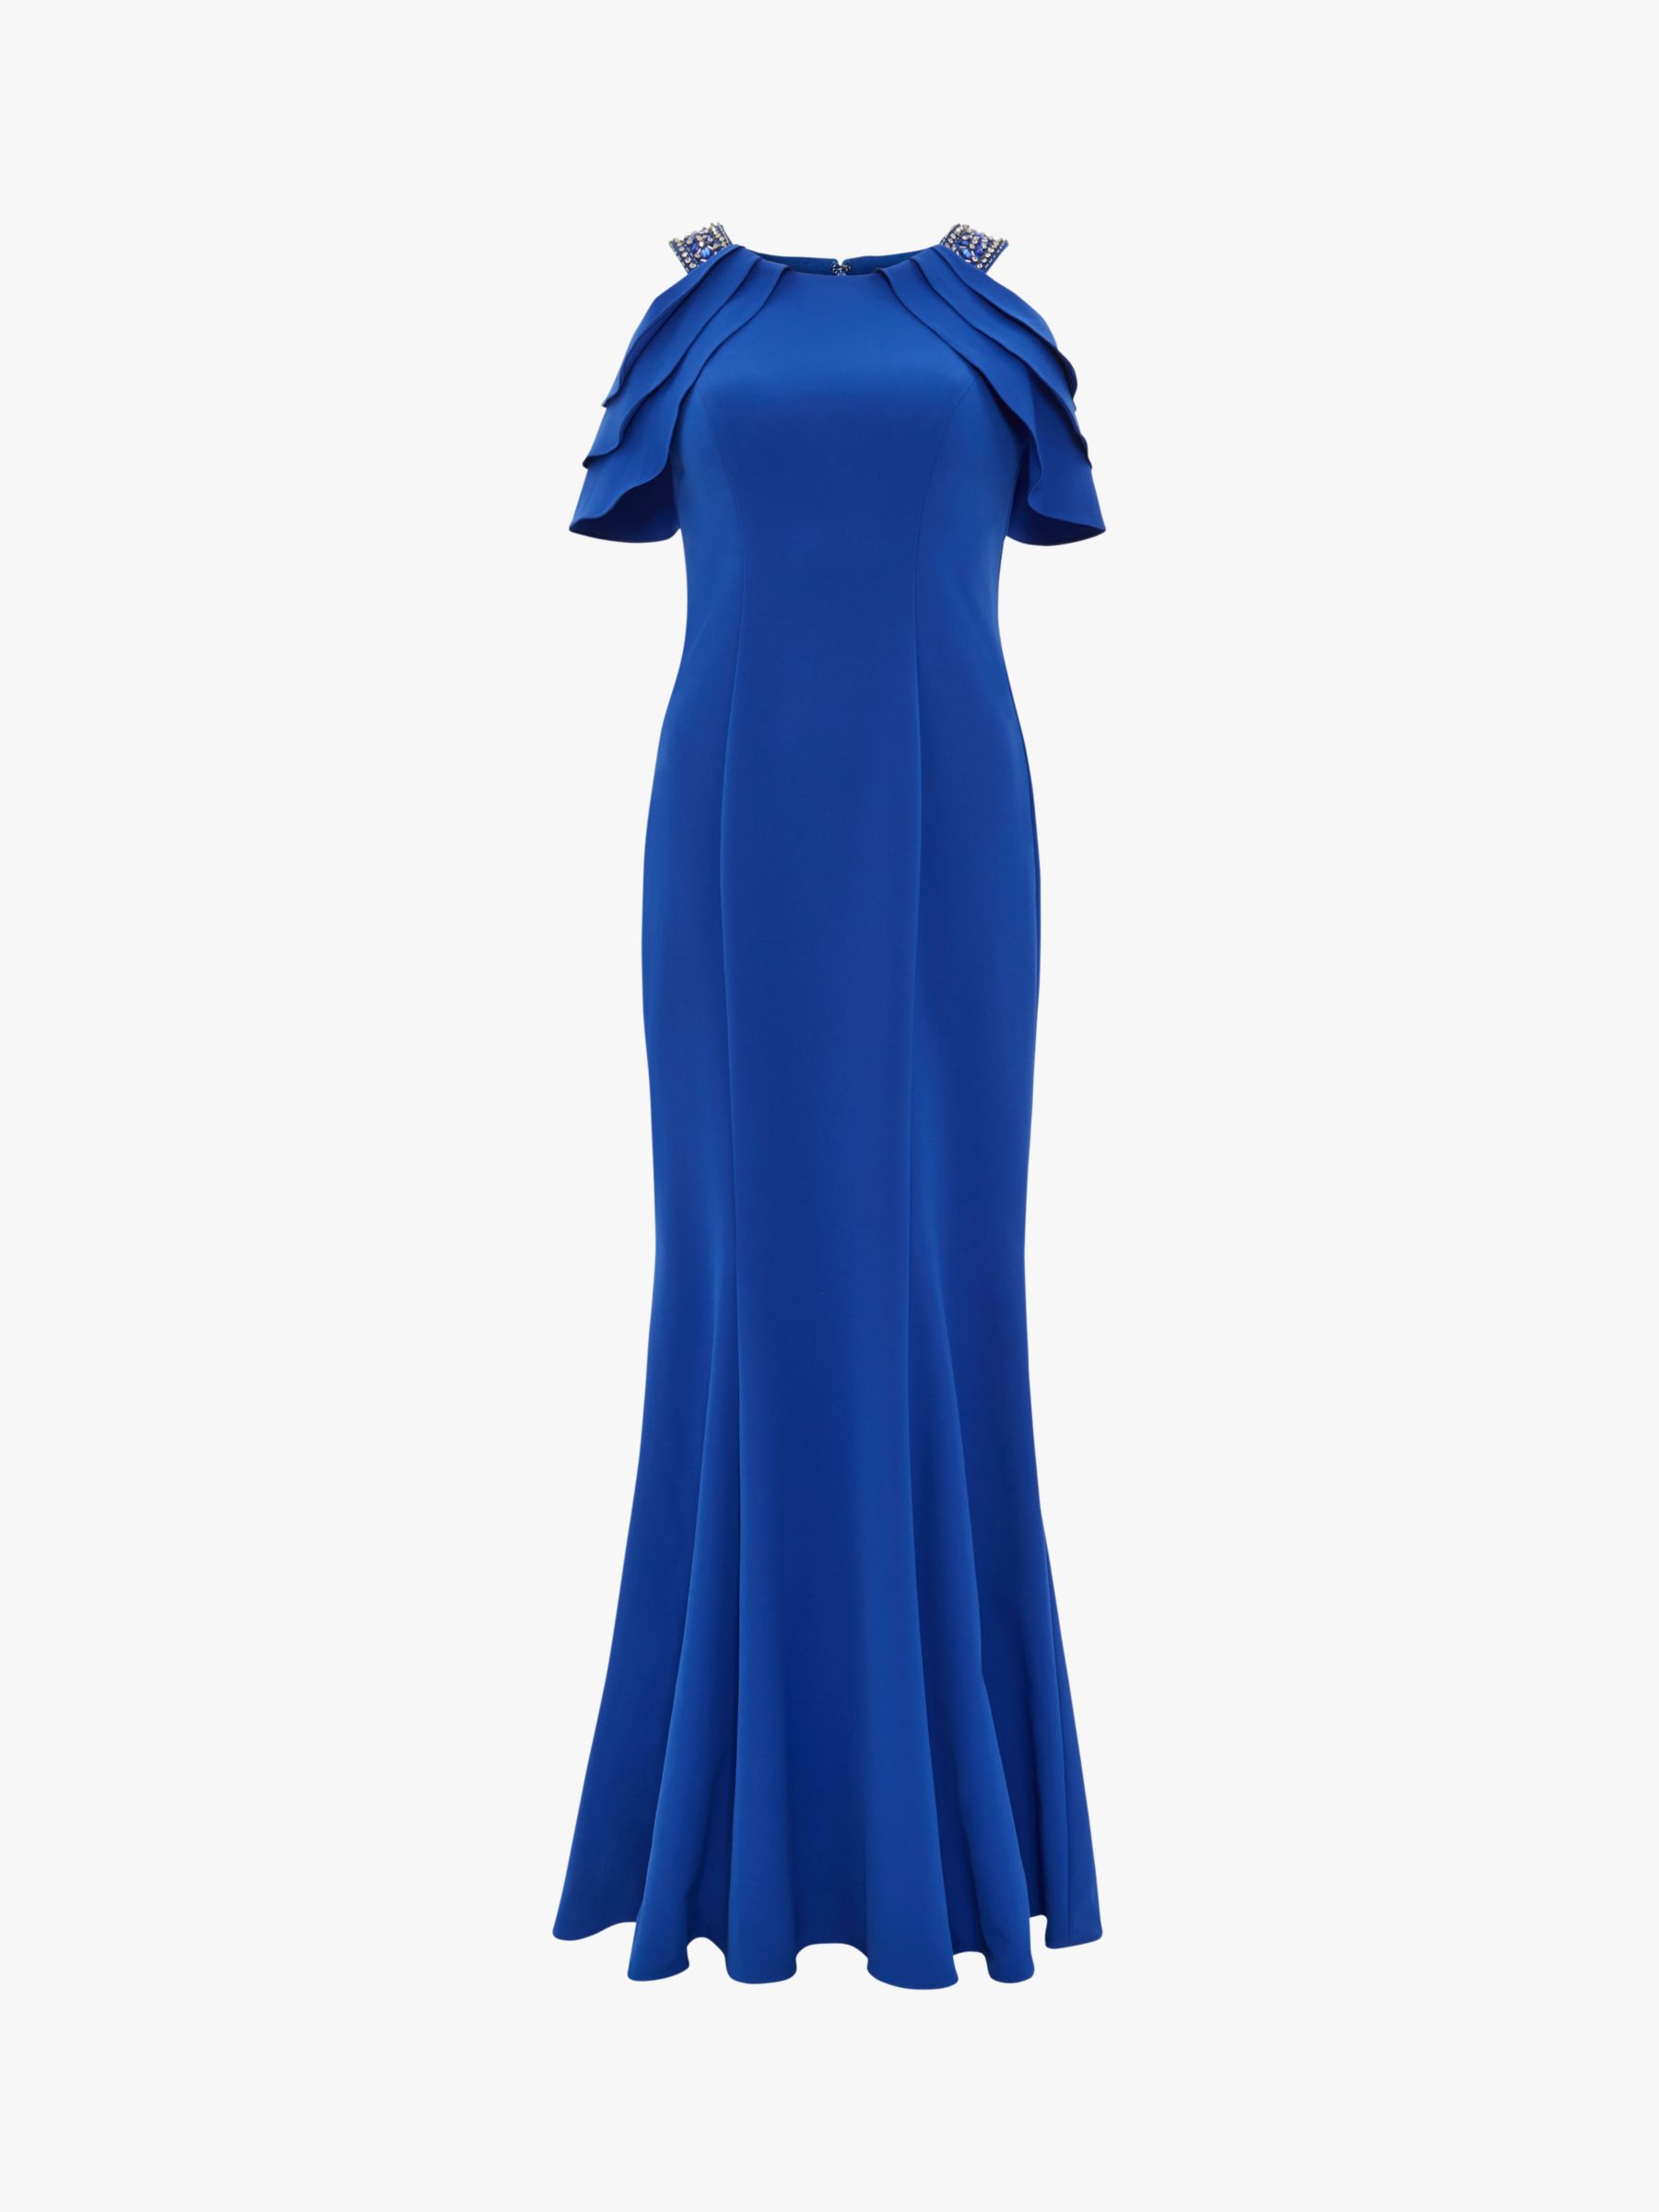 Gina Bacconi Julianne Crepe Maxi Dress, Royal Blue at John Lewis & Partners